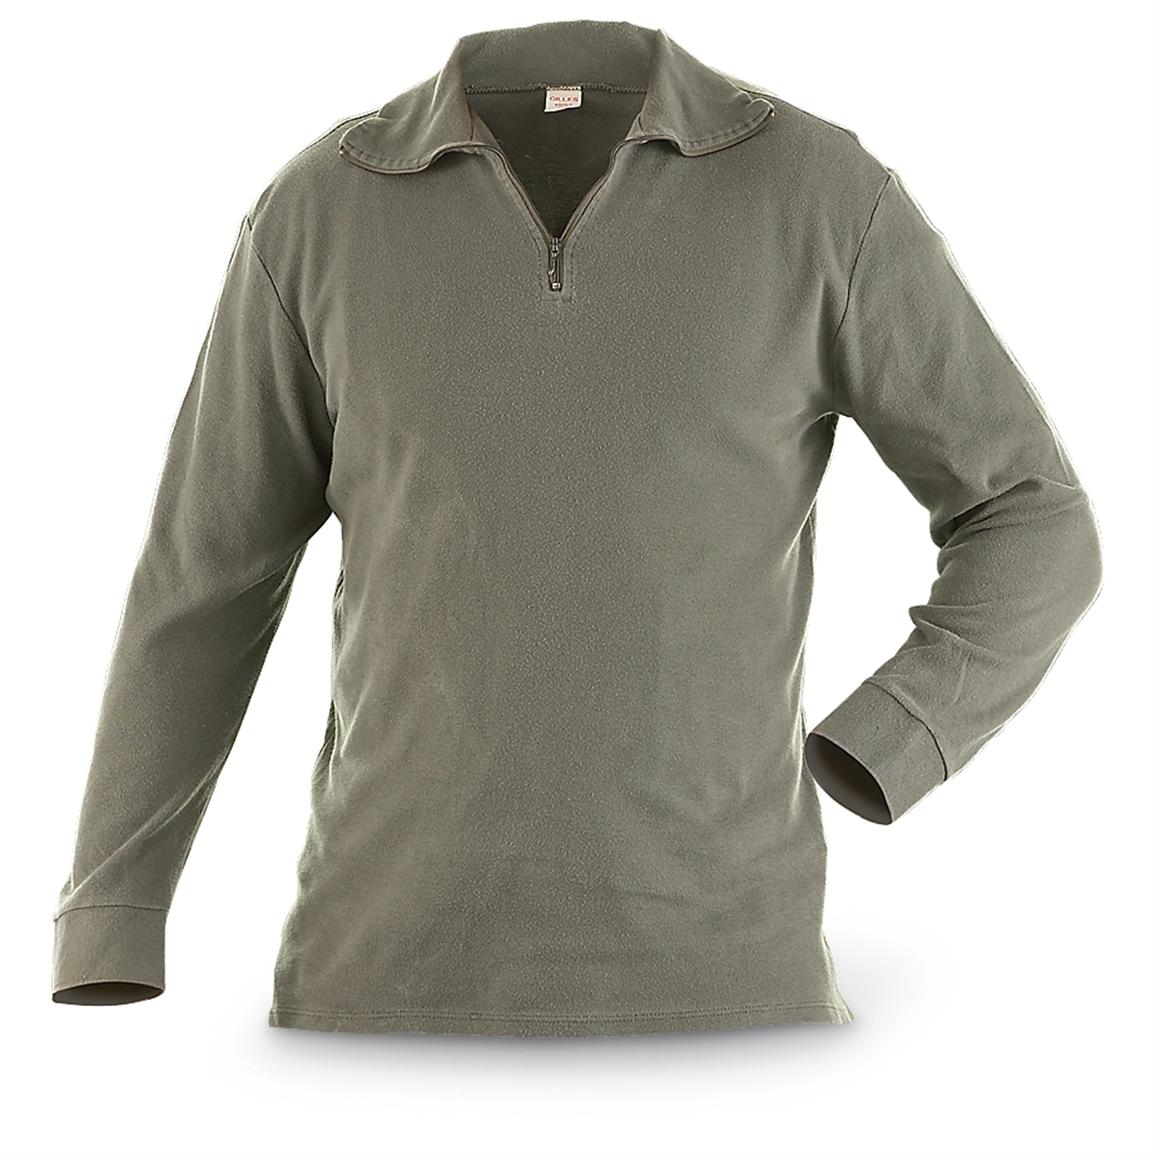 4 Used French Military Sleep Shirts, Olive Drab - 187170, Shirts at ...